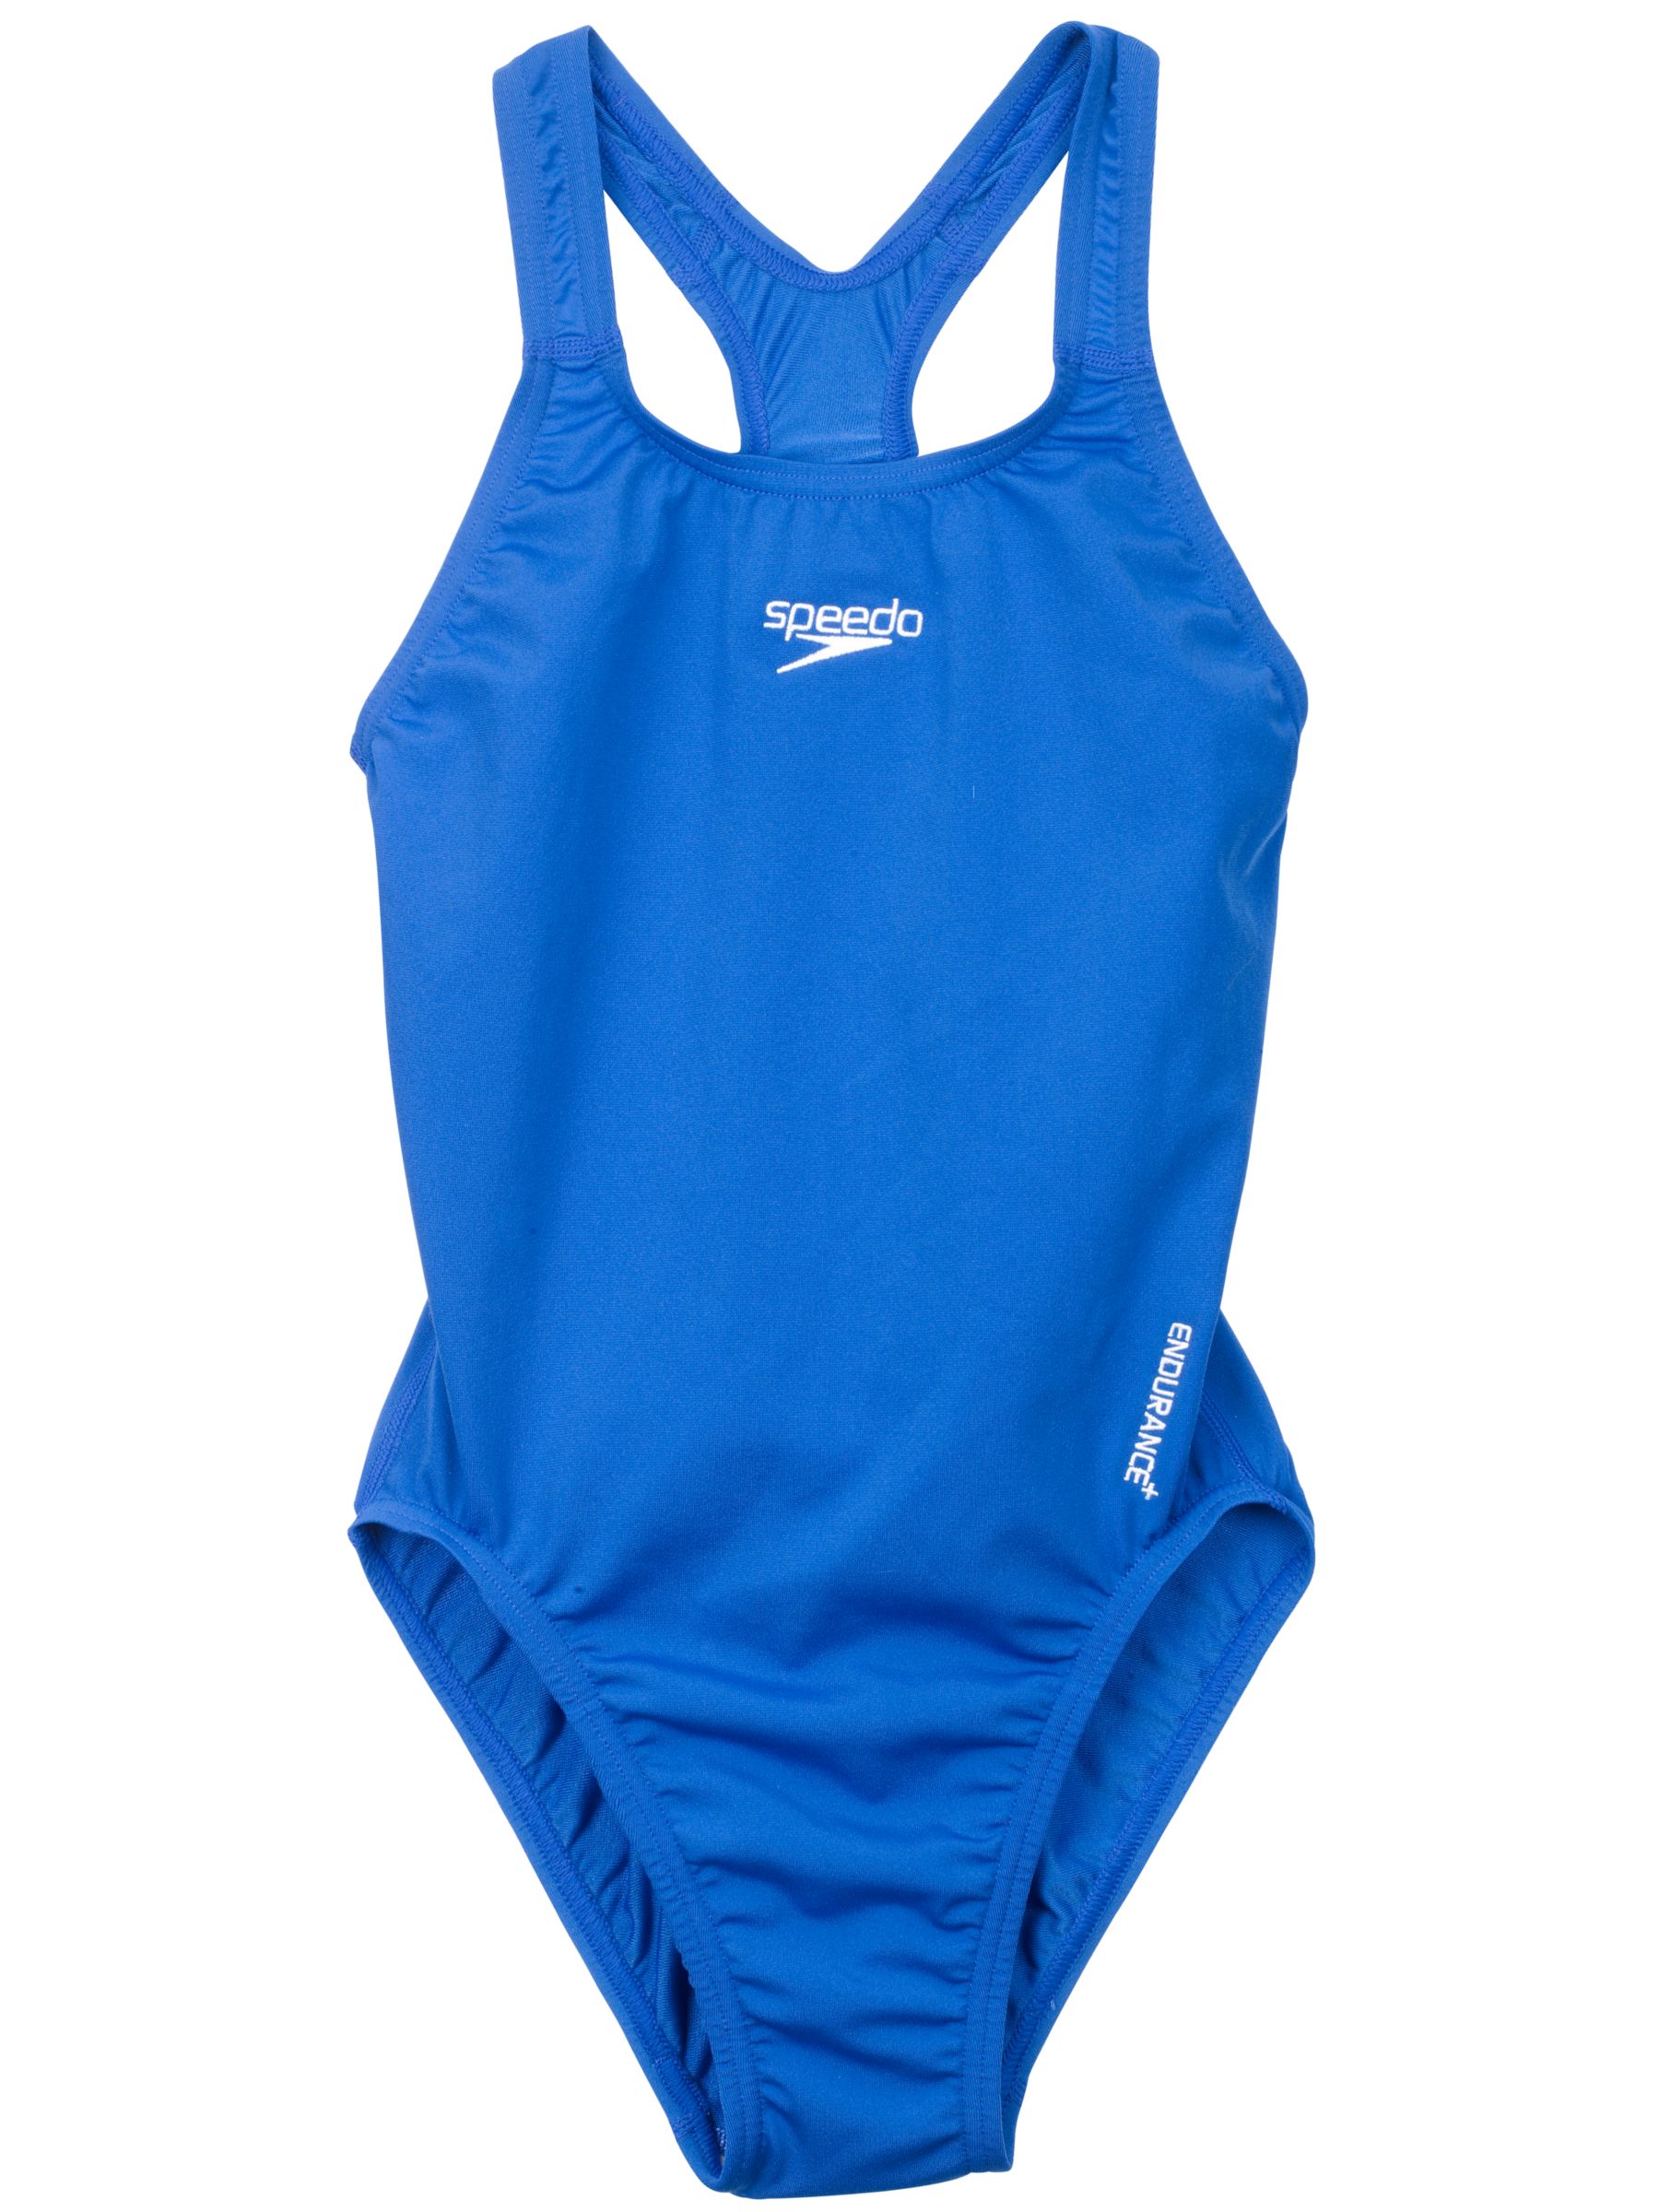 Speedo Medalist Swimsuit, Blue, 10 Years